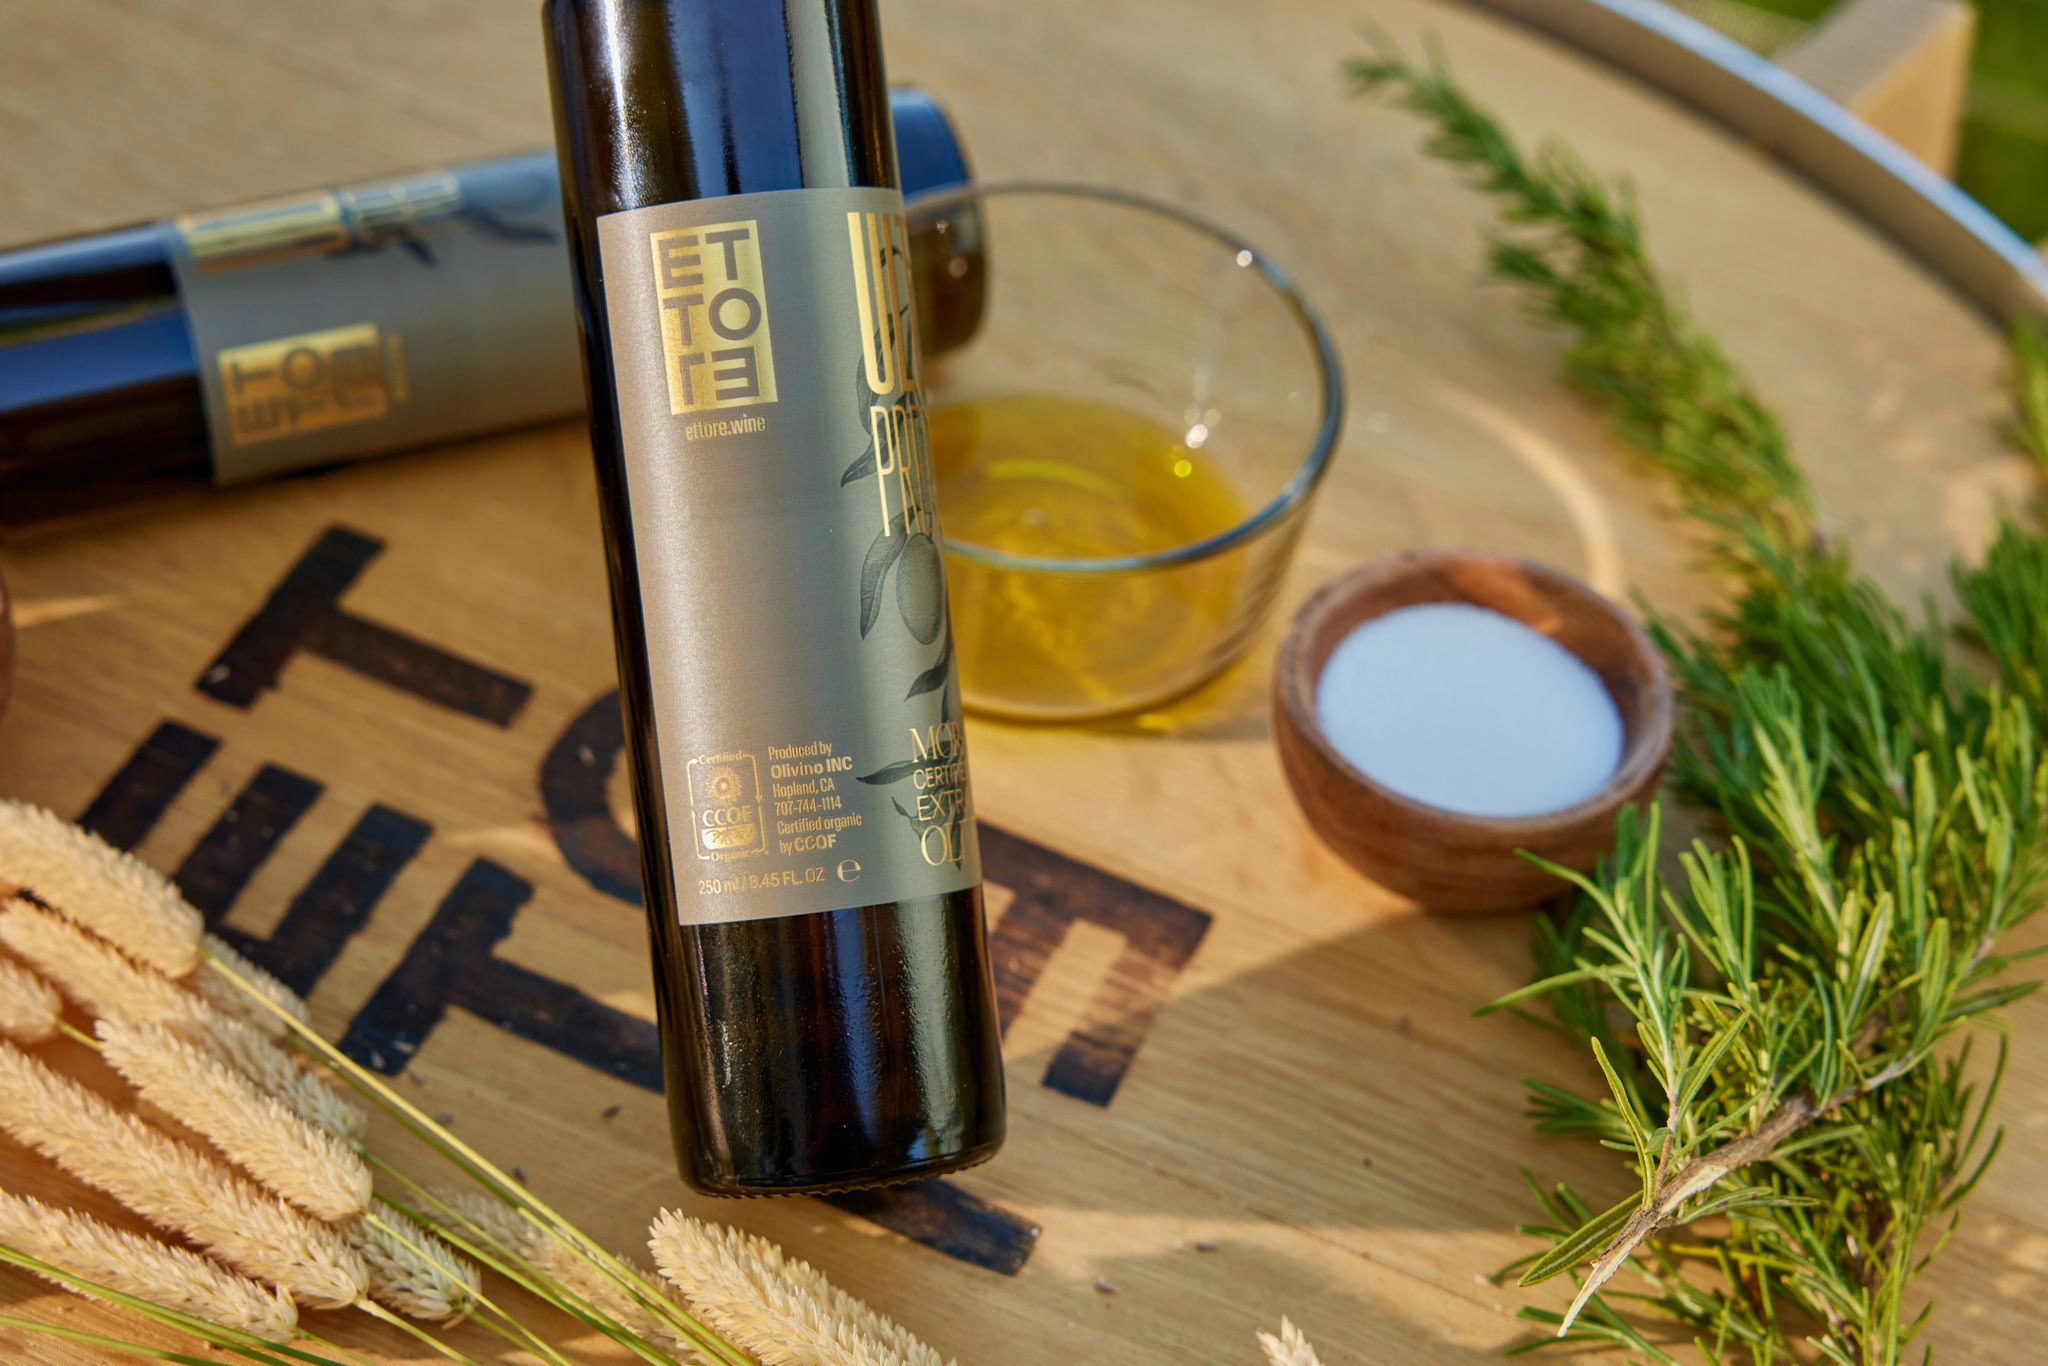 Ettore's Ultra Premium Olive Oil